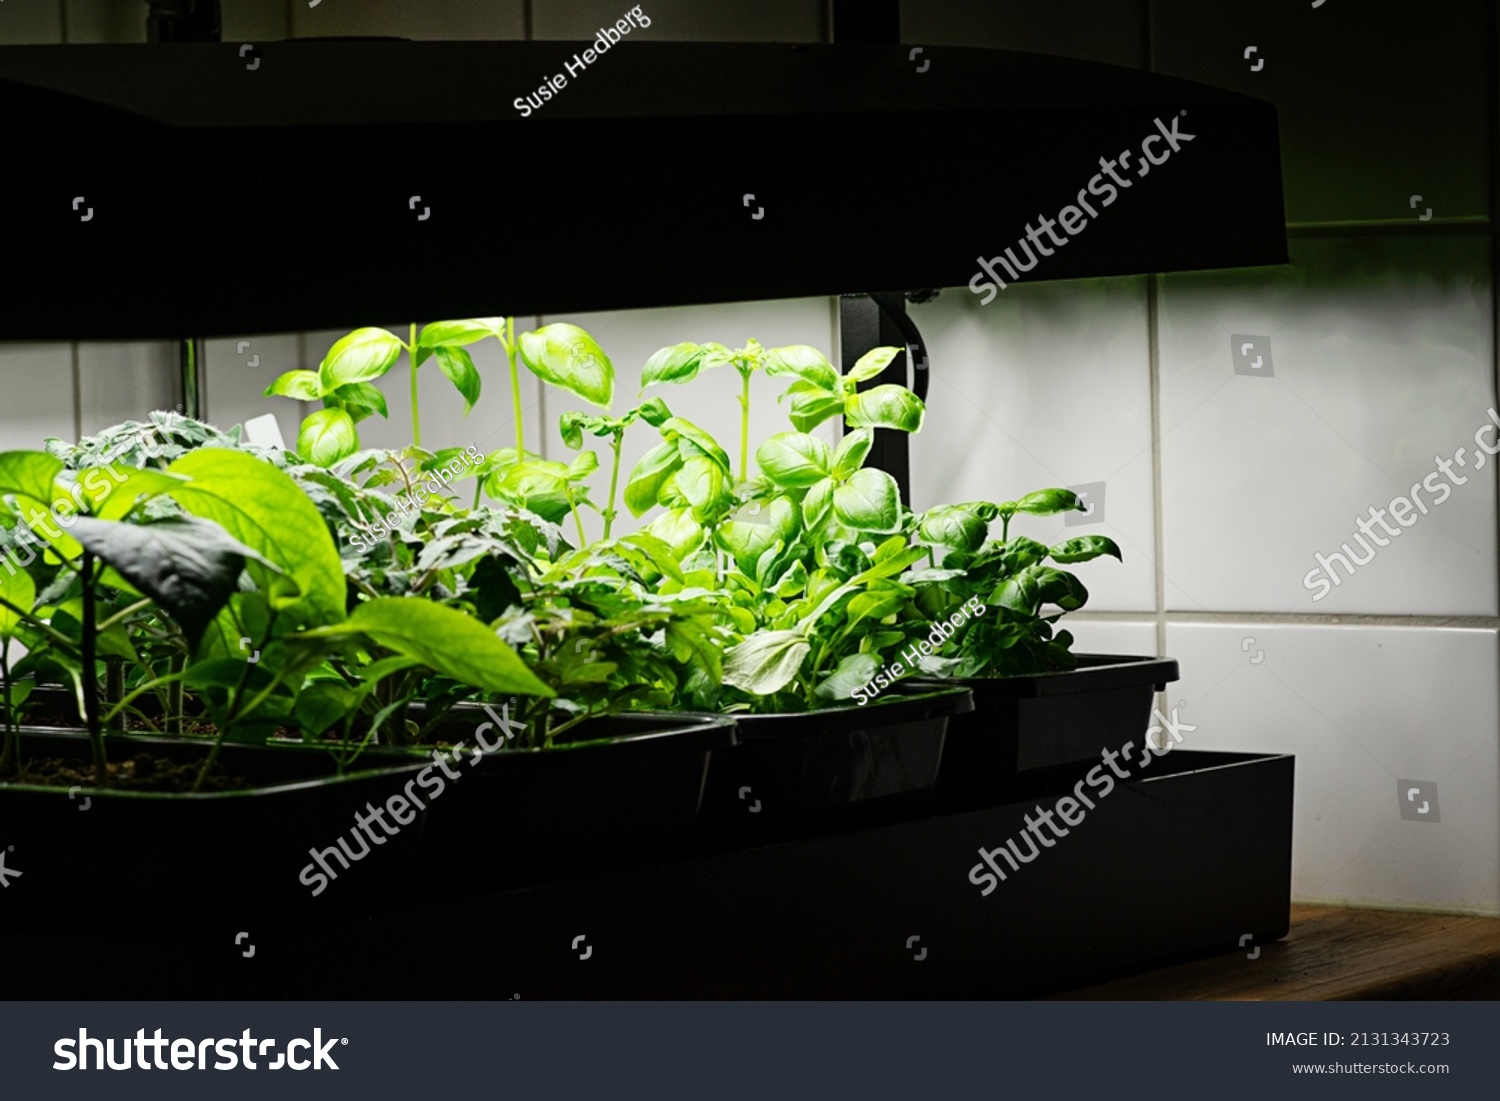 Growing vegetables indoors with grow lights. Fresh basil, lettuce, and tomato plants growing indoors in pots under grow lights. Concept of indoor vegetable garden. #2131343723